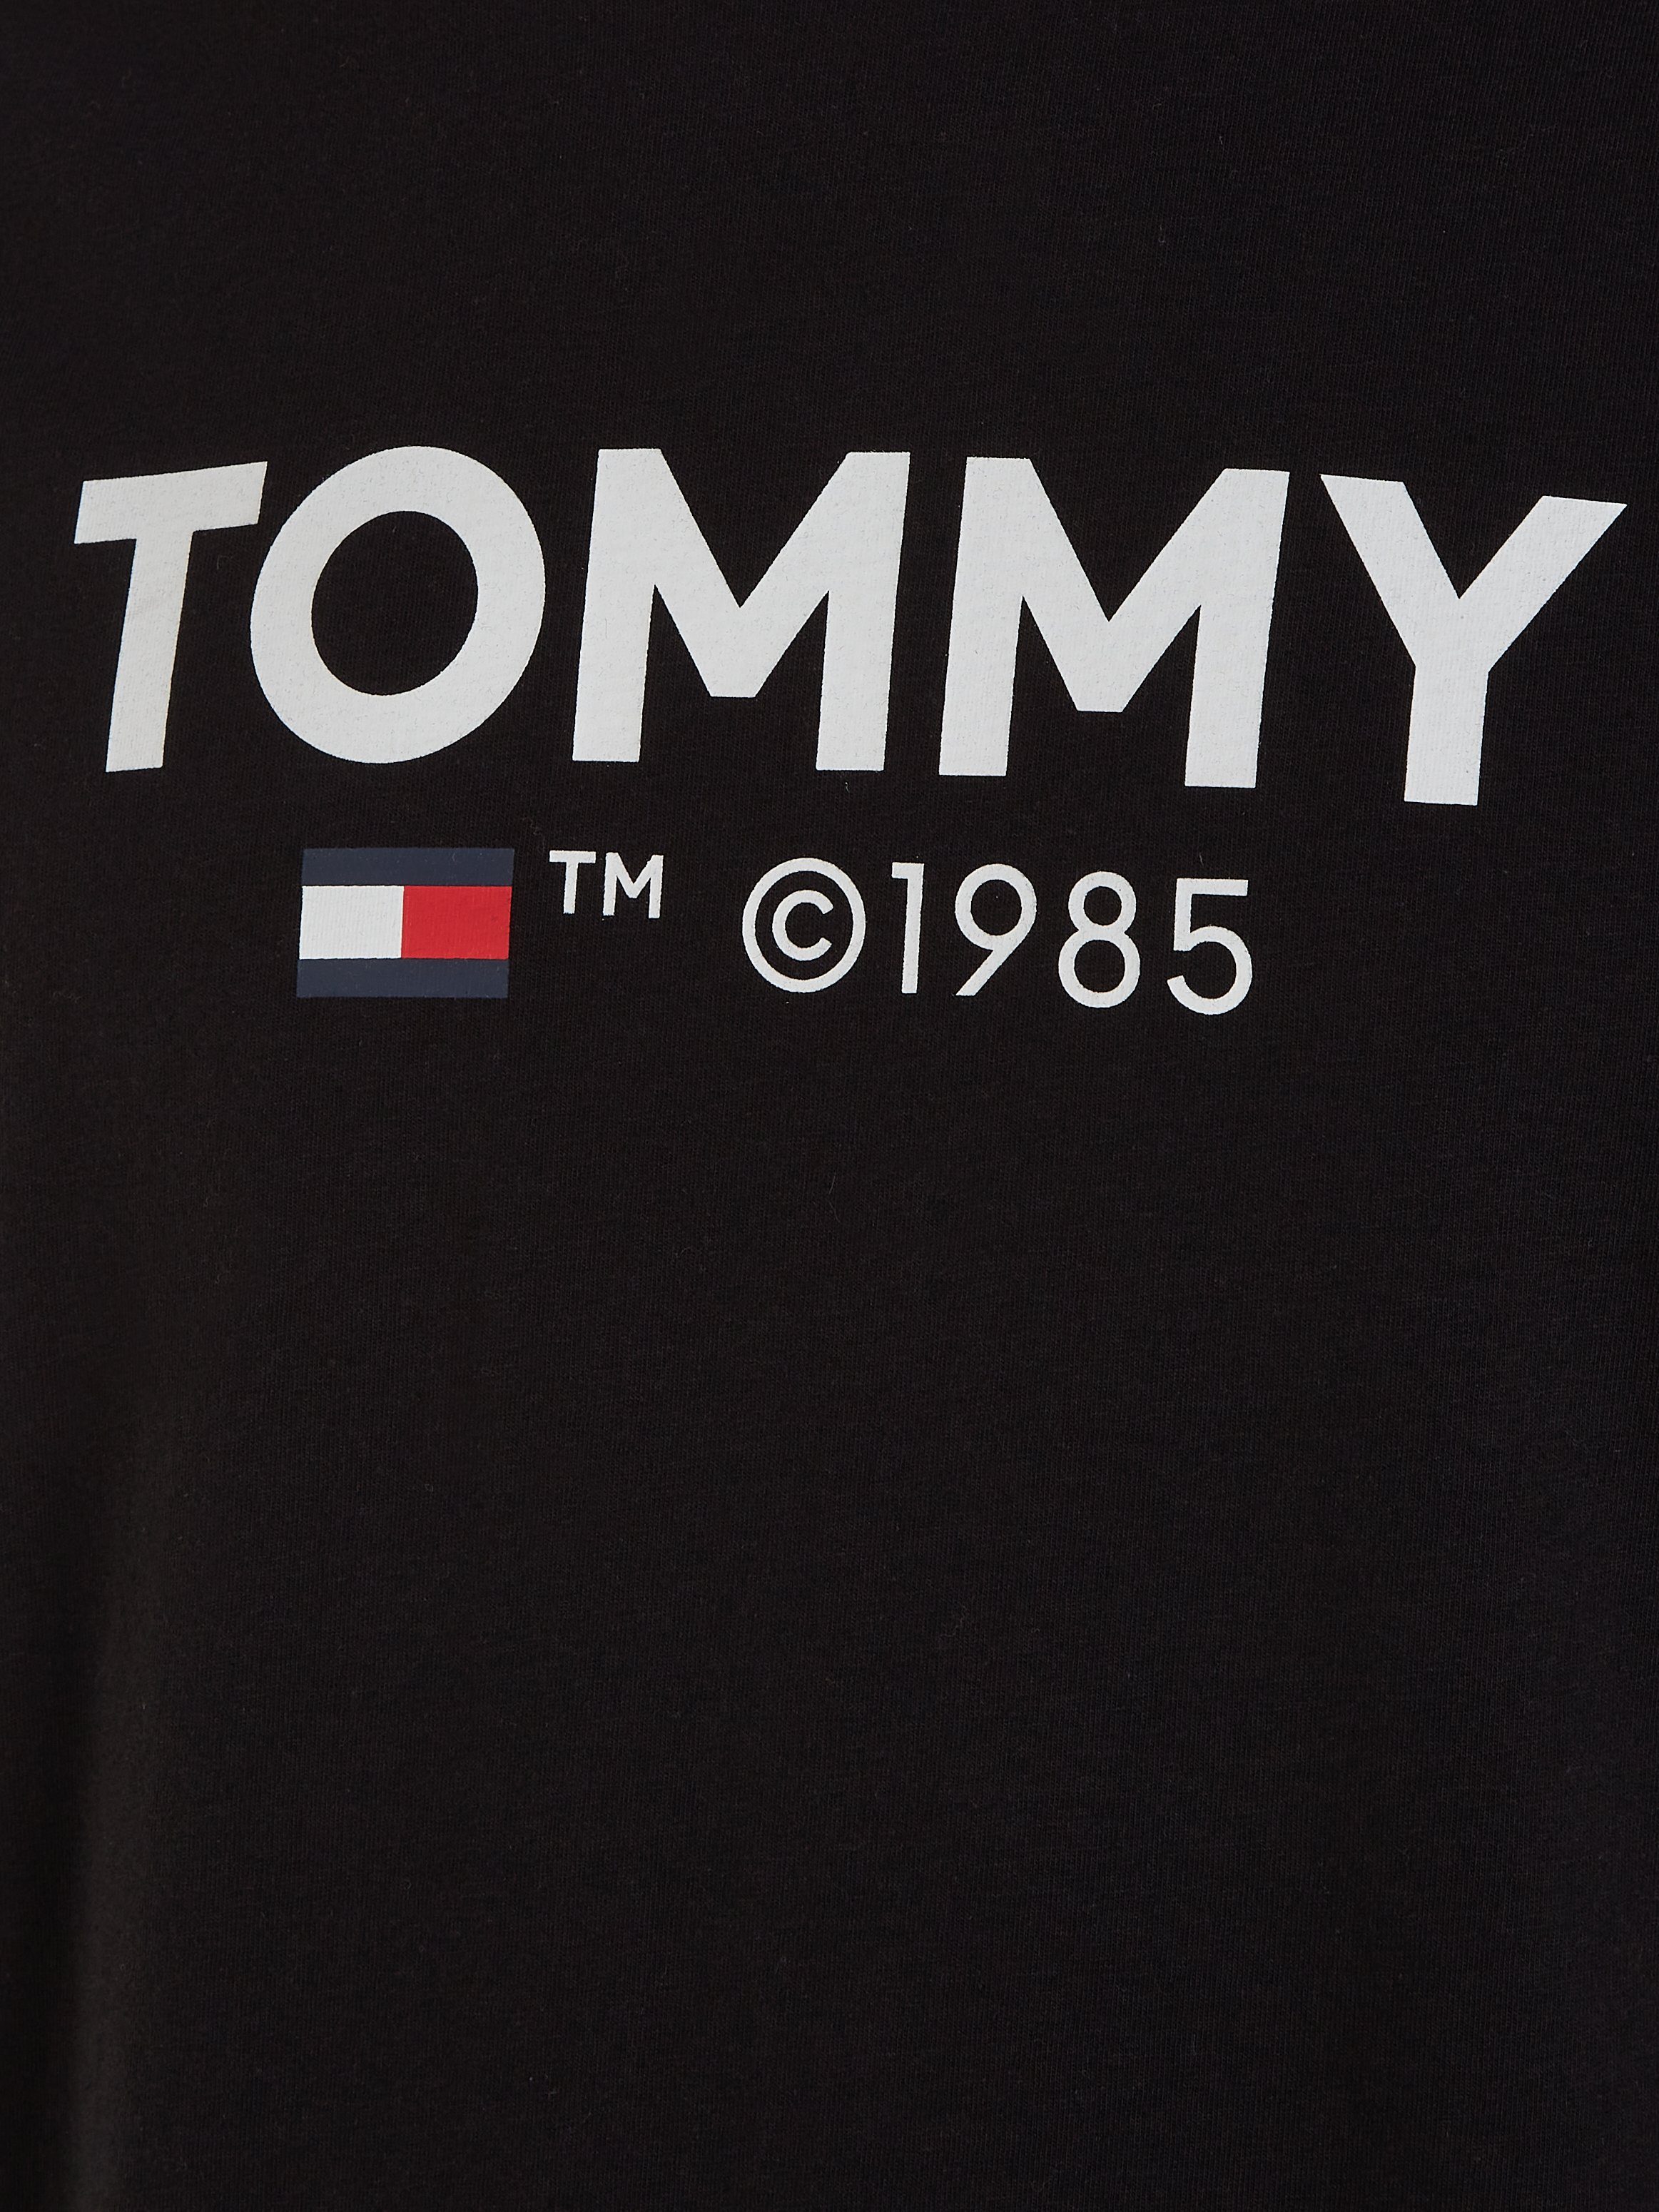 Tommy Brust Black T-Shirt ESSENTIAL auf Jeans mit TJM TOMMY Druck großem Tommy SLIM der TEE